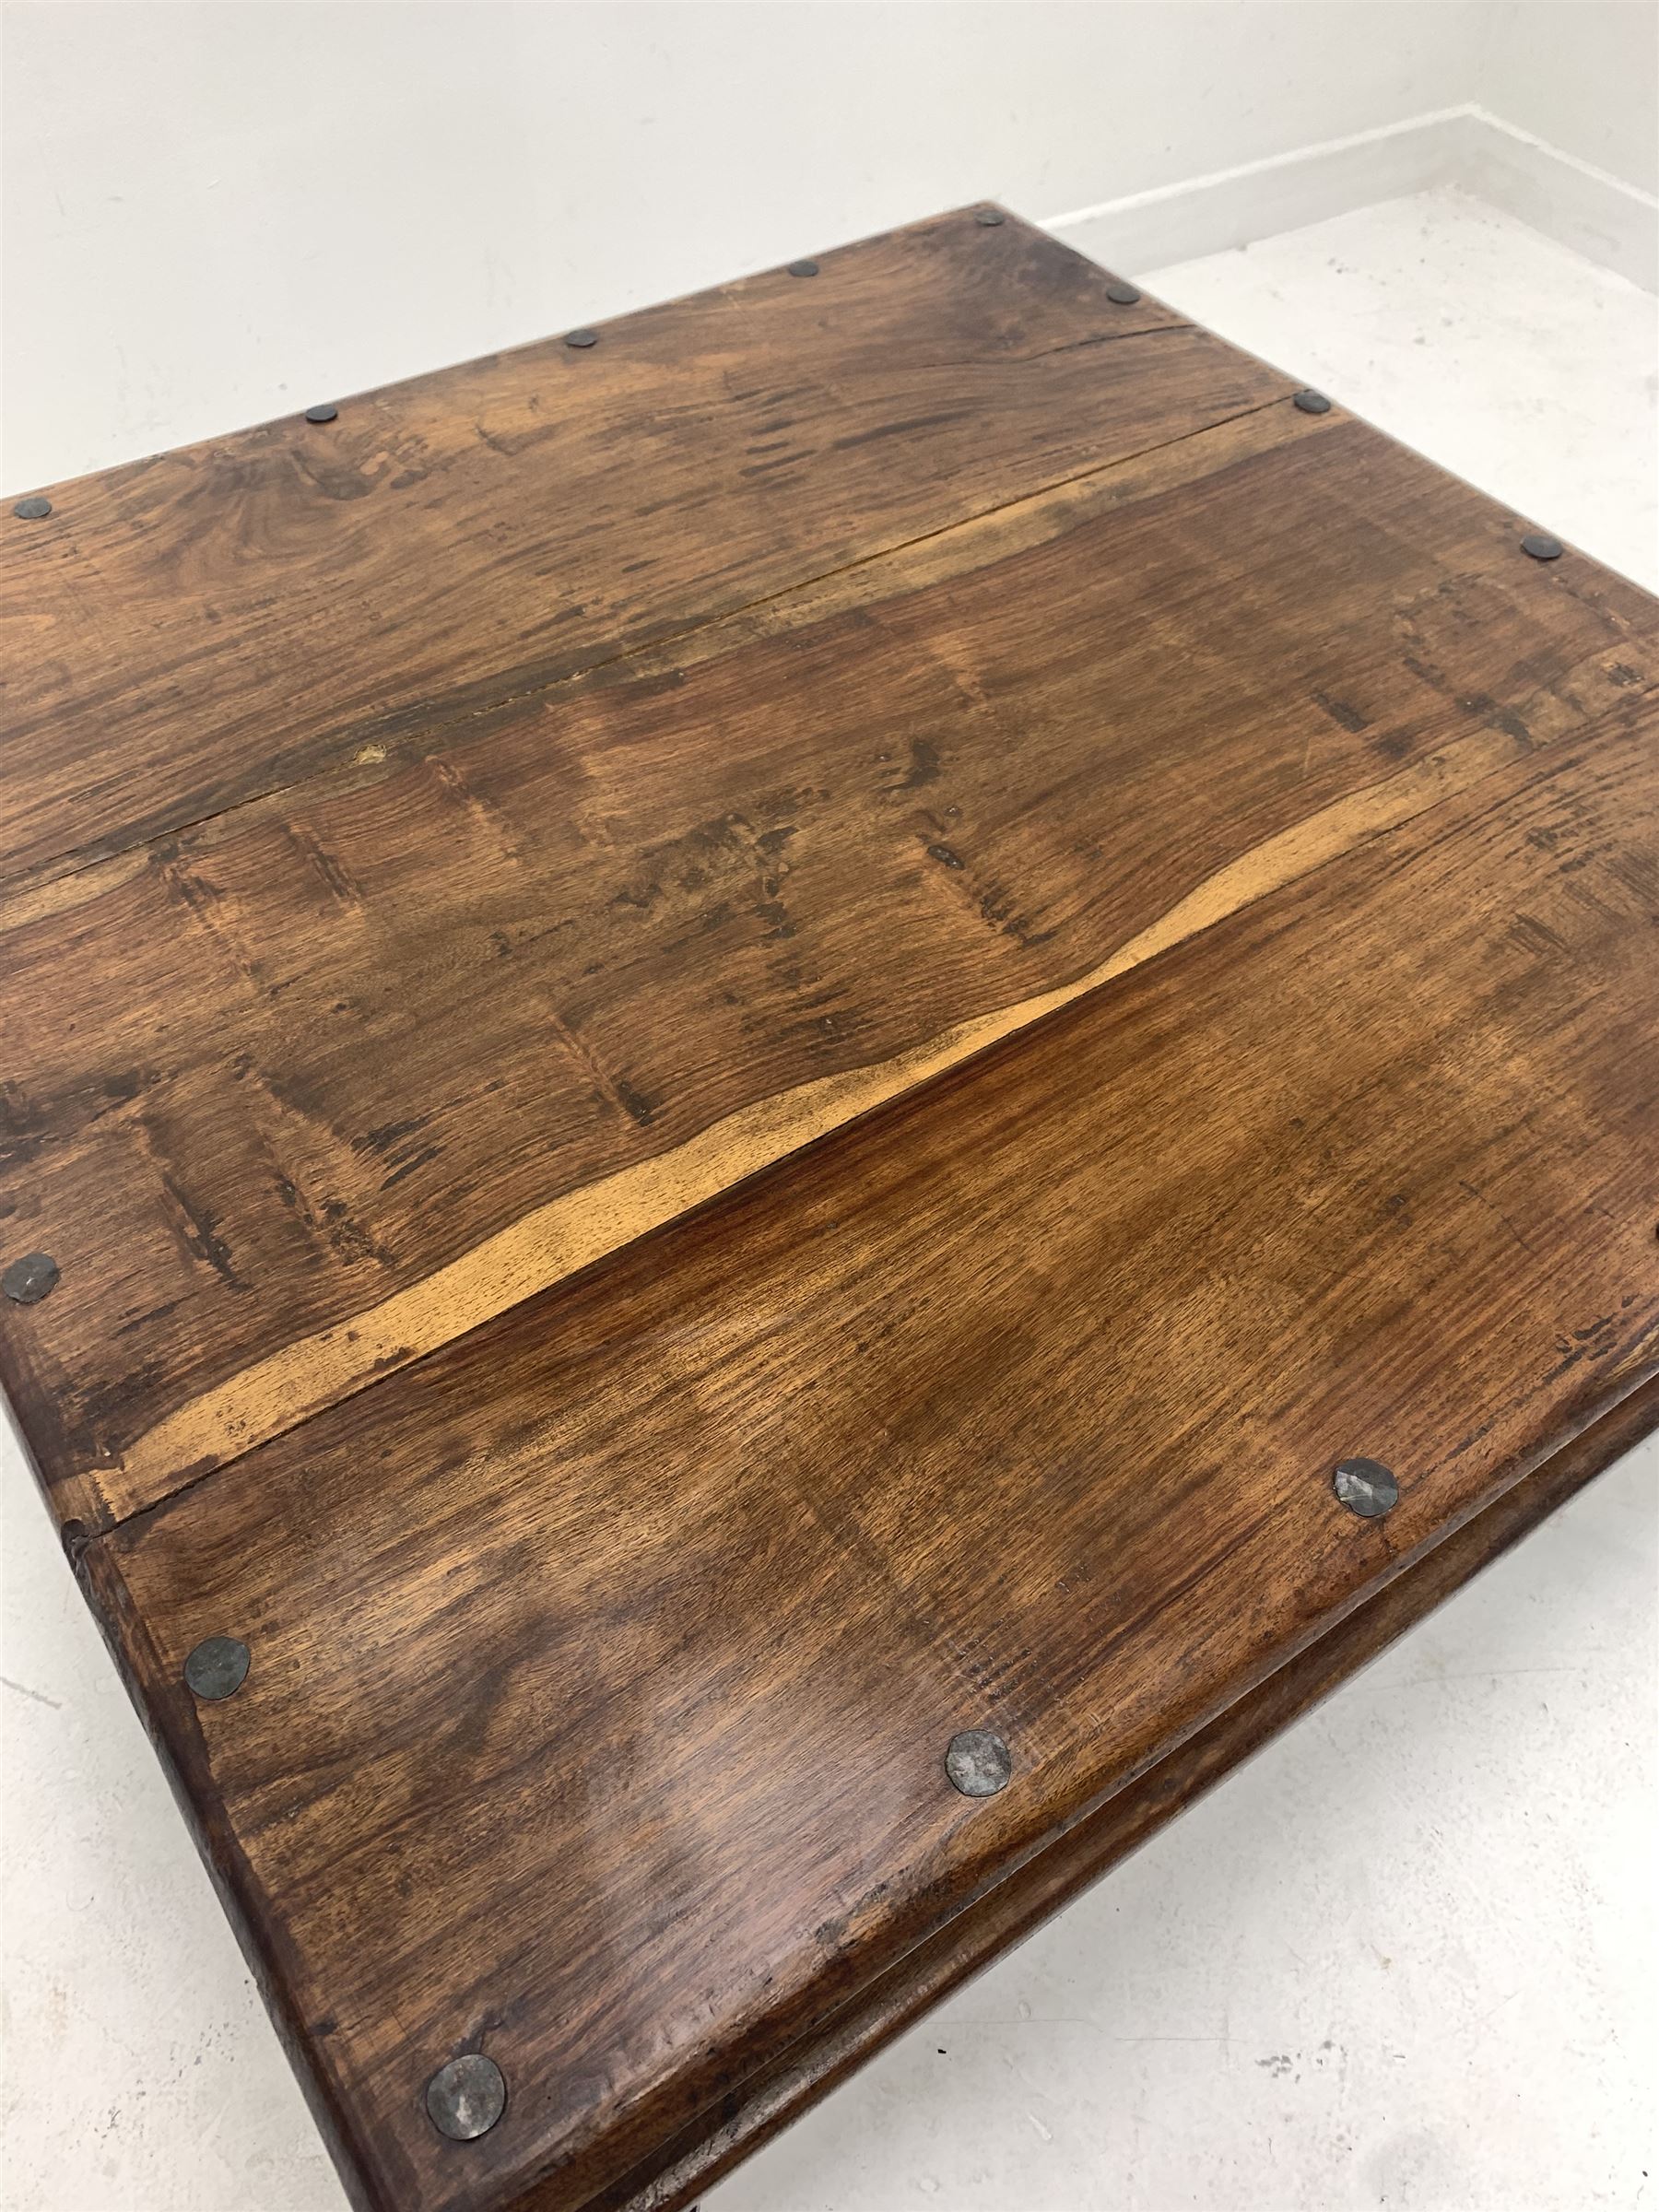 Eastern hardwood square coffee table - Image 2 of 3